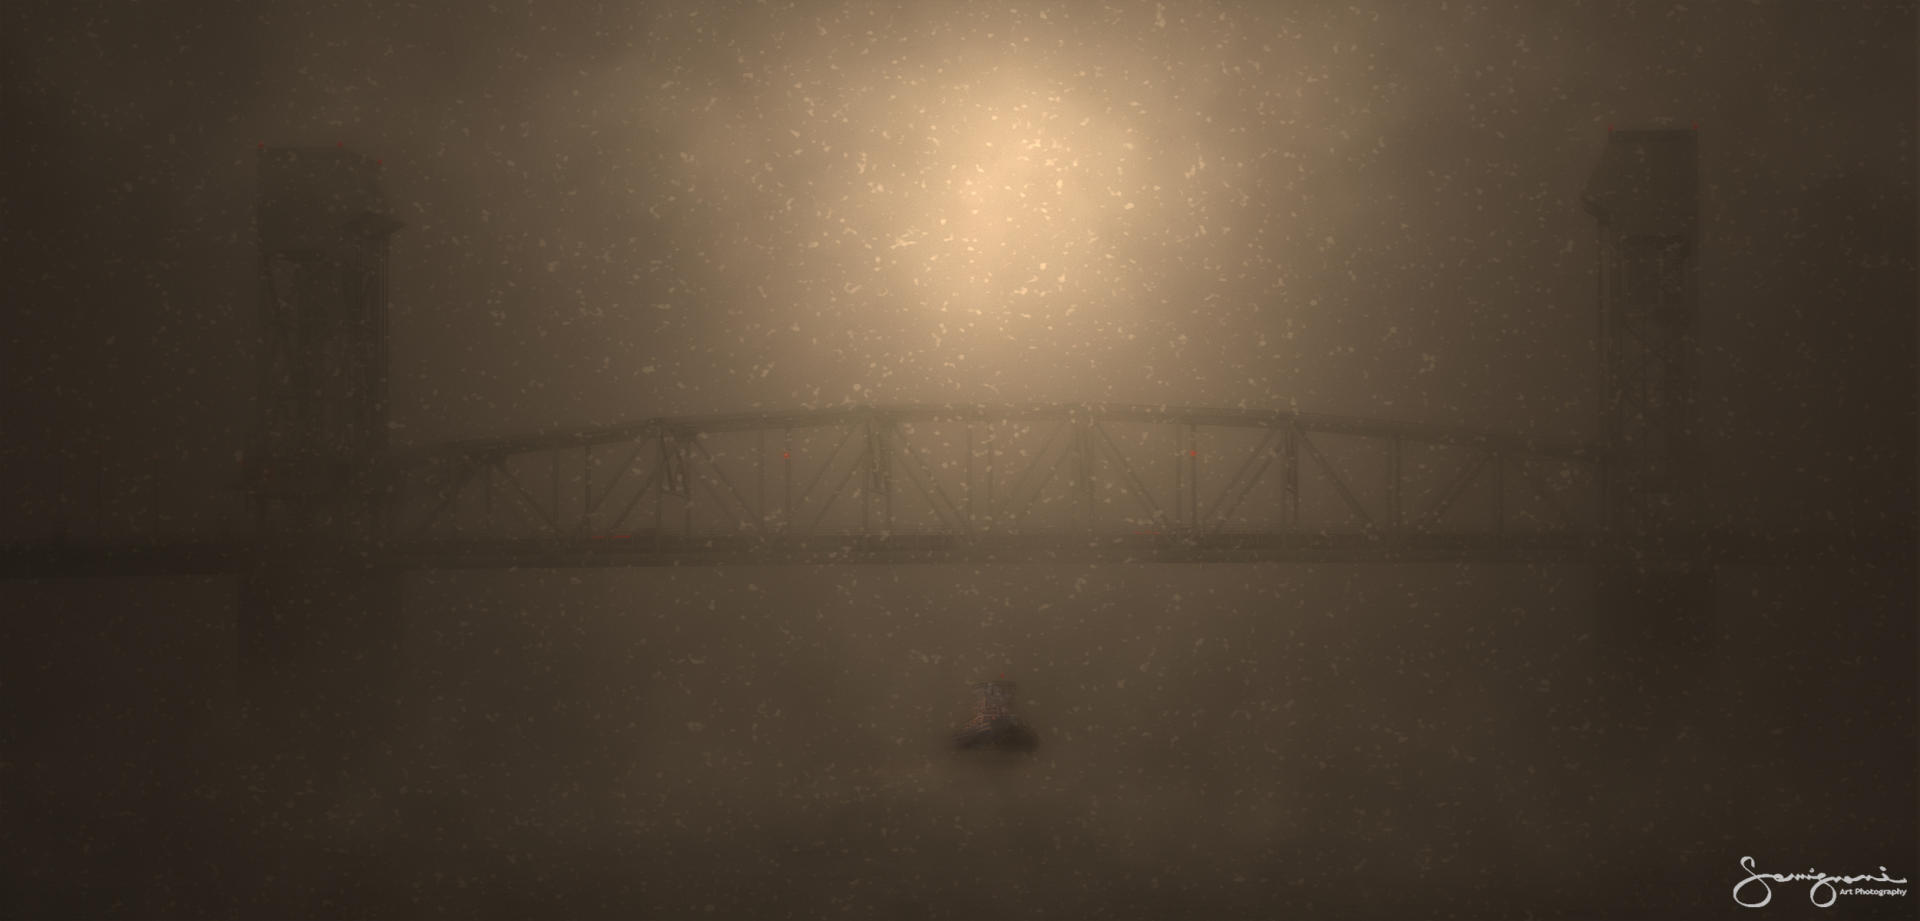 Tug Boat in Snow and Fog-Cape Fear Bridge-
Wilmington, NC